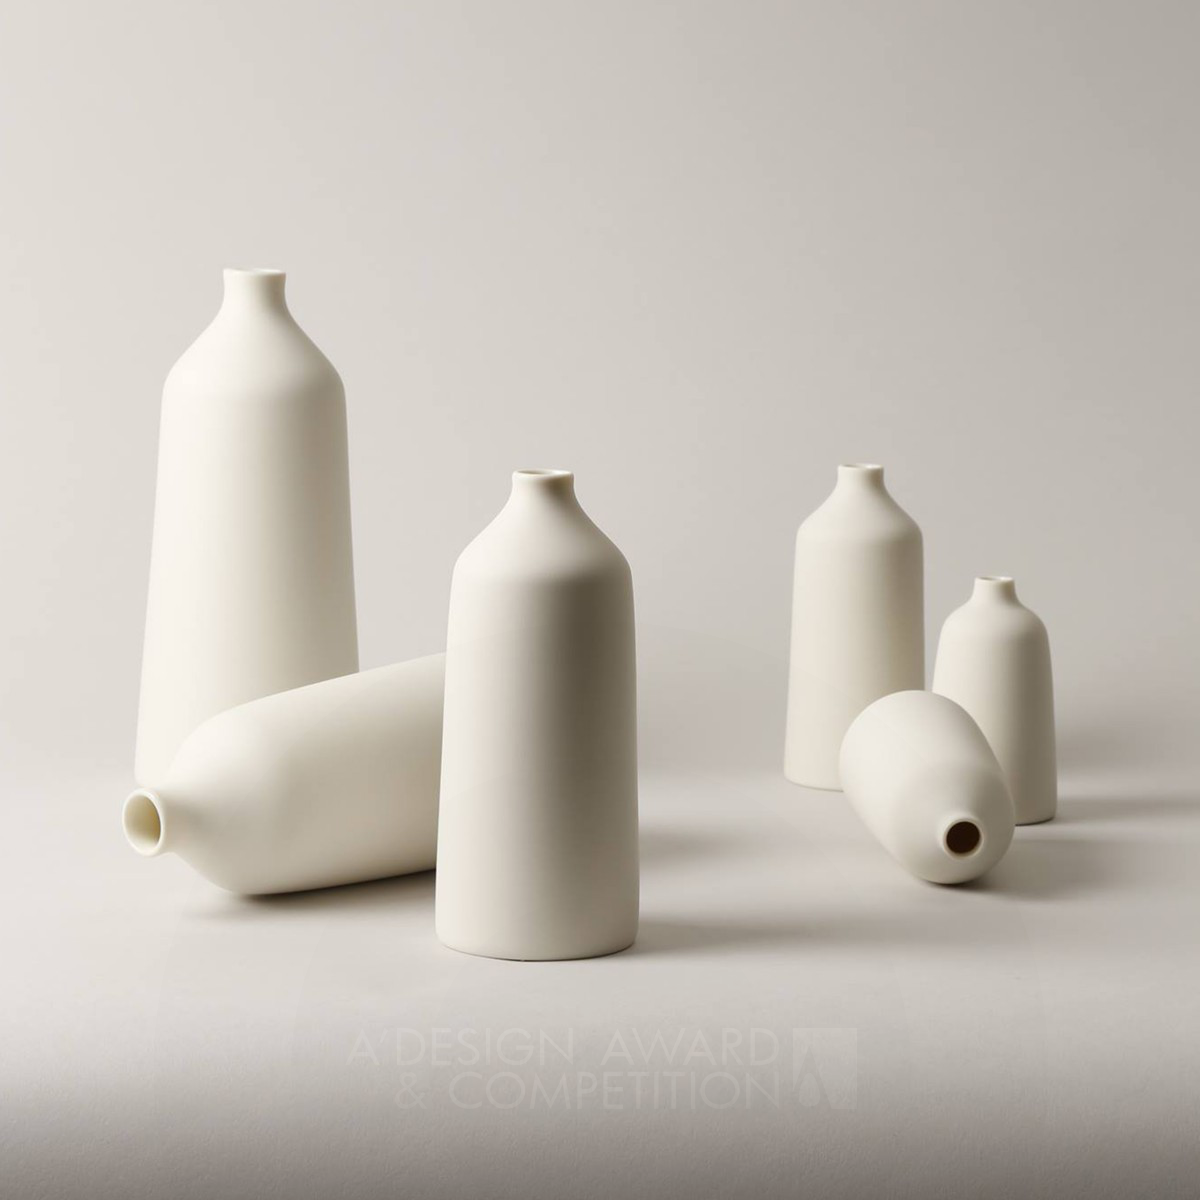 Noiseless Flower Vase by Yasuhiro Kuze